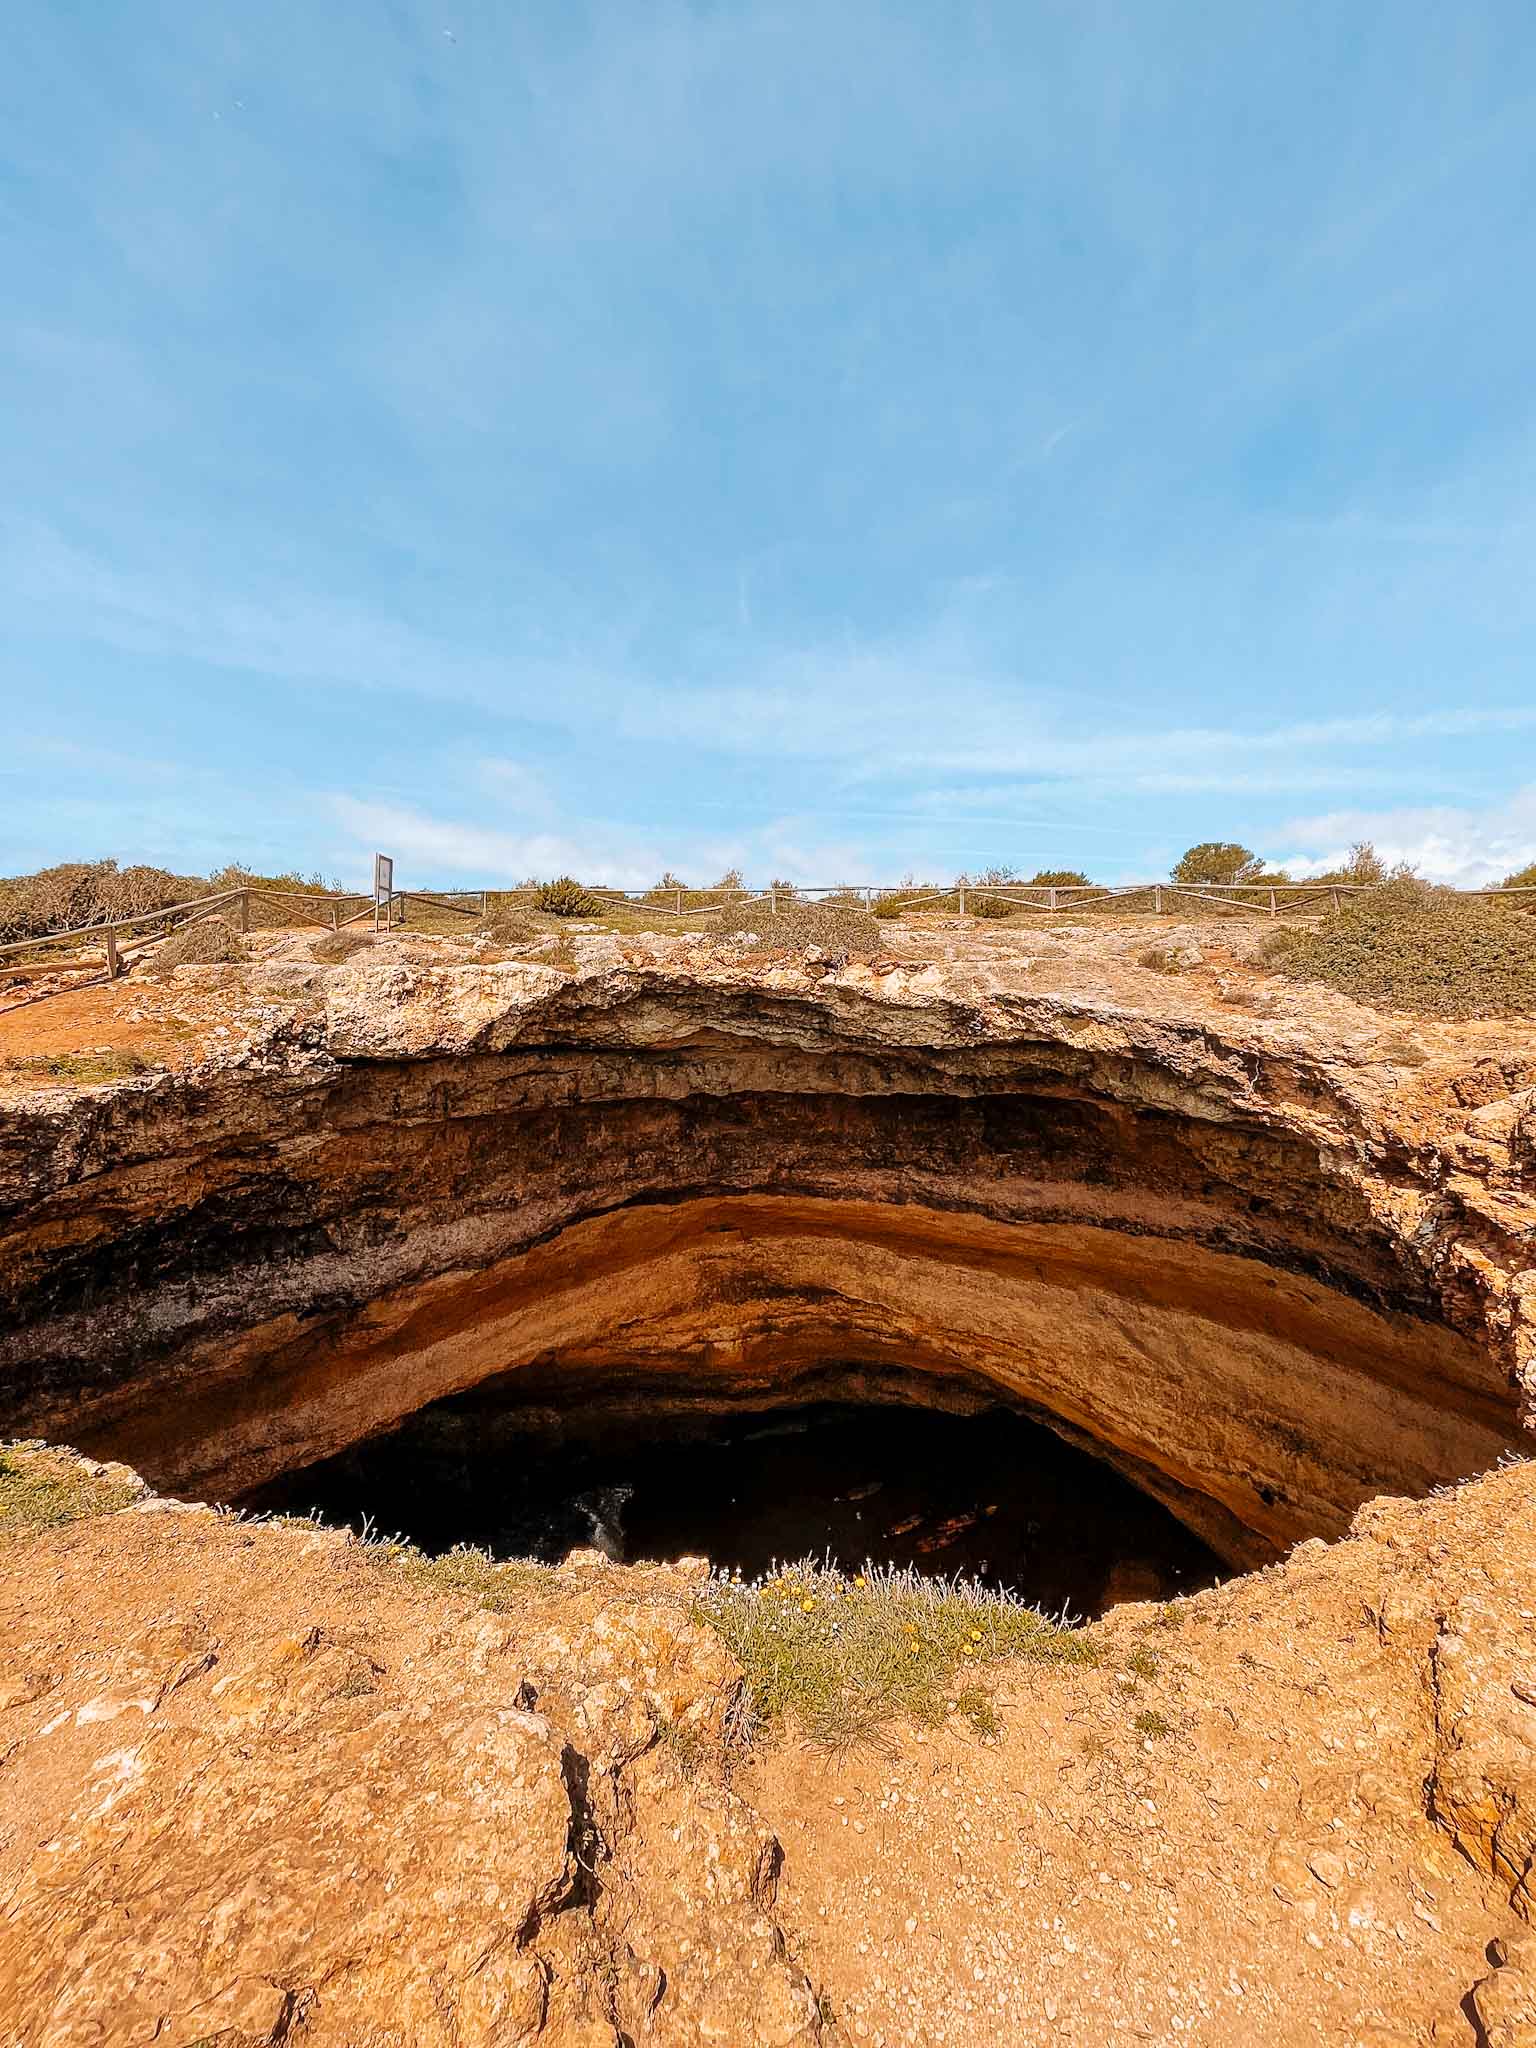 Visit the famous Benagil cave in Algarve, Portugal